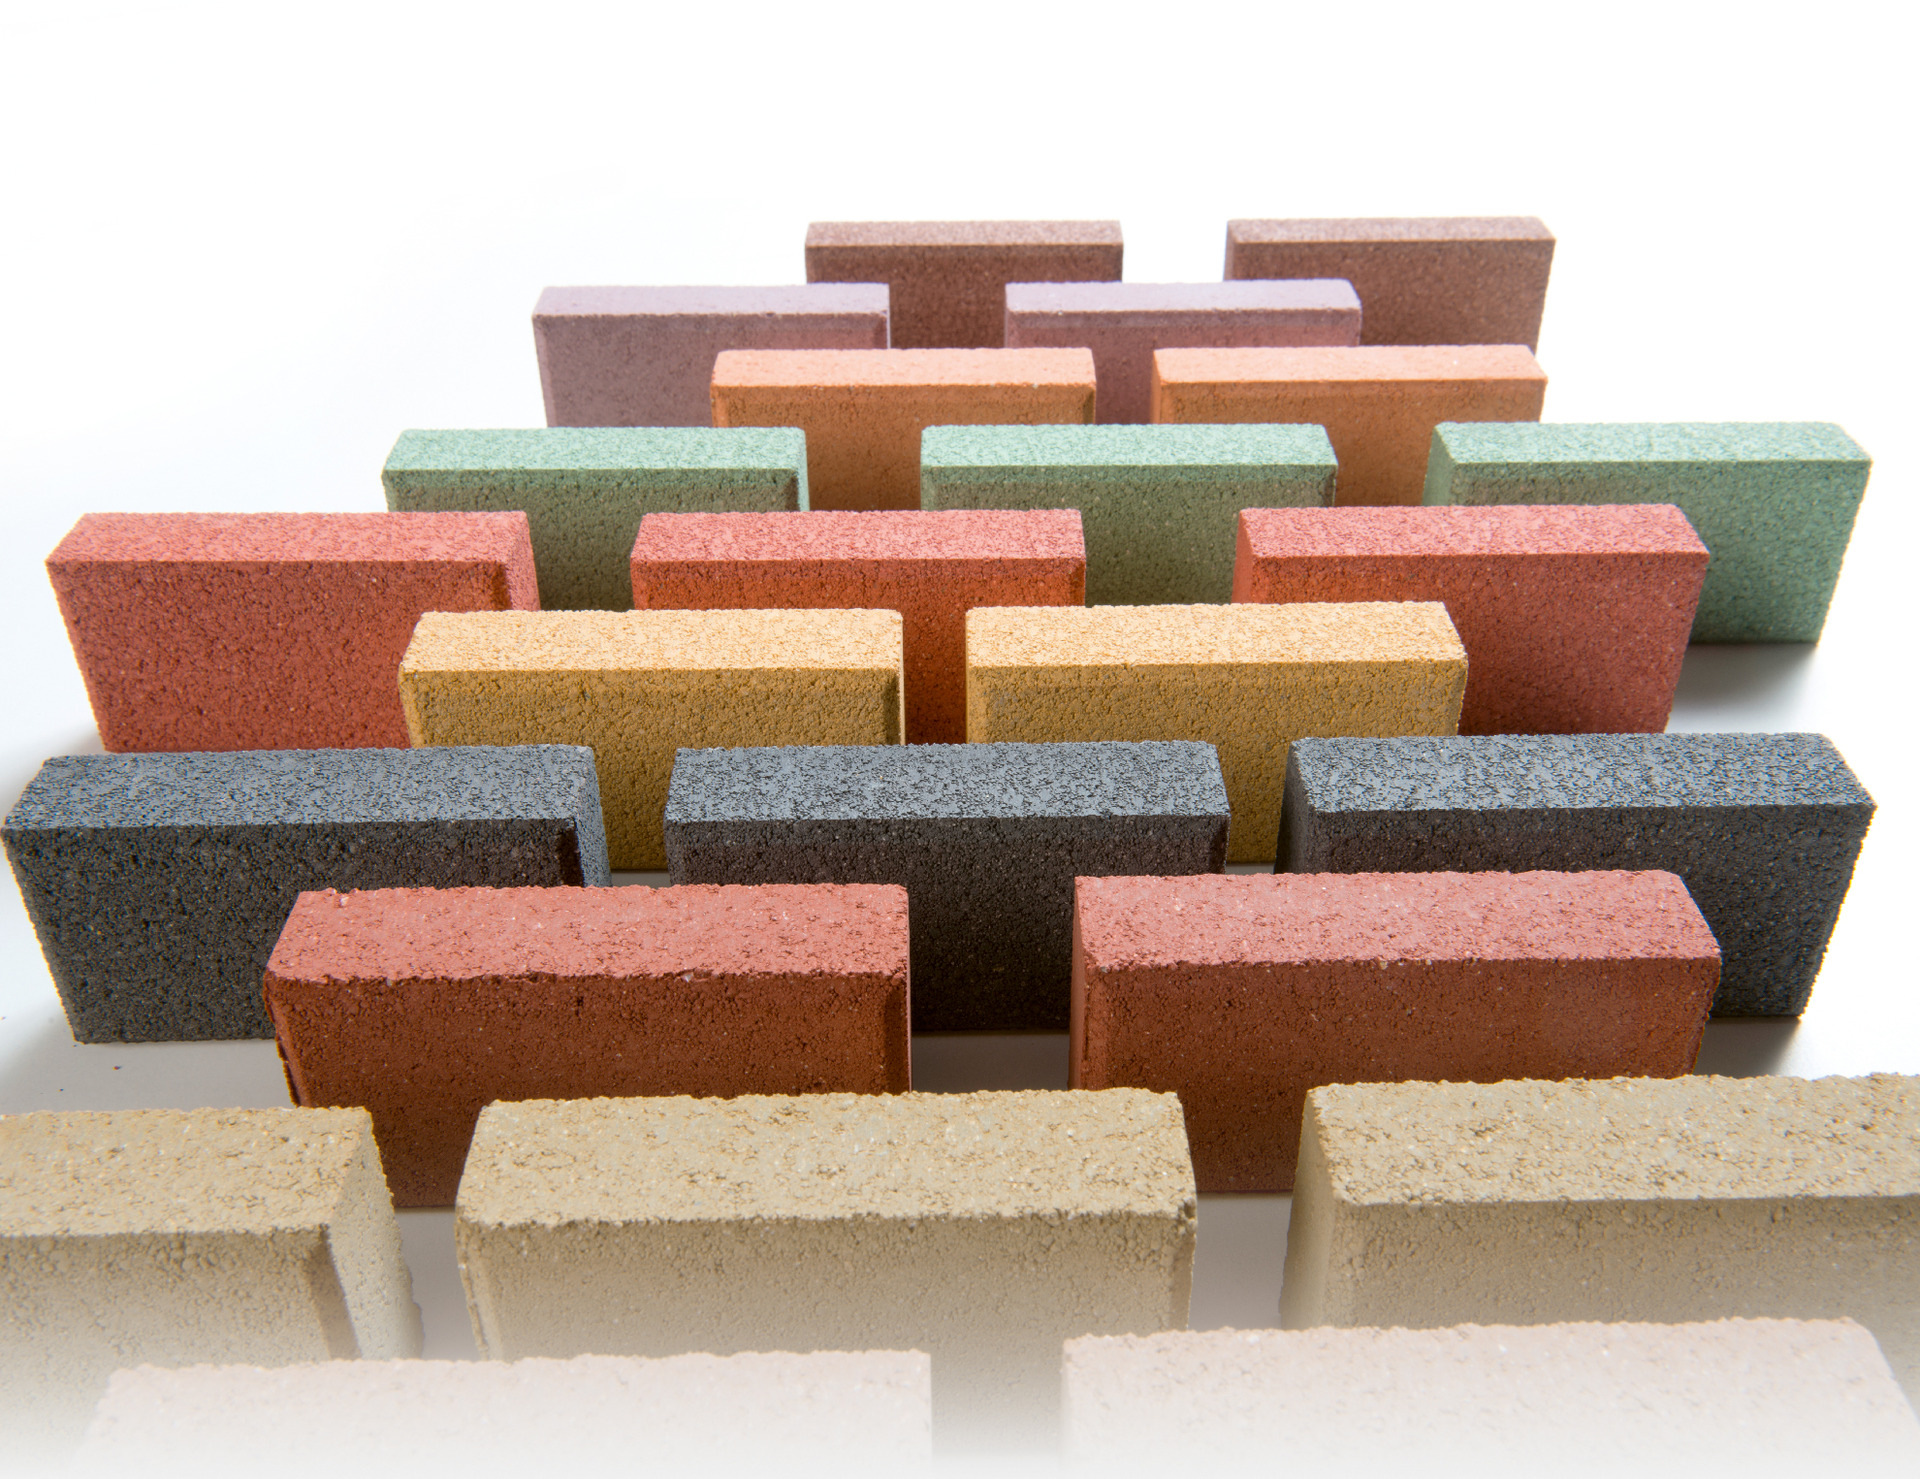 Symbol image: concrete blocks  colored with Bayferrox pigments